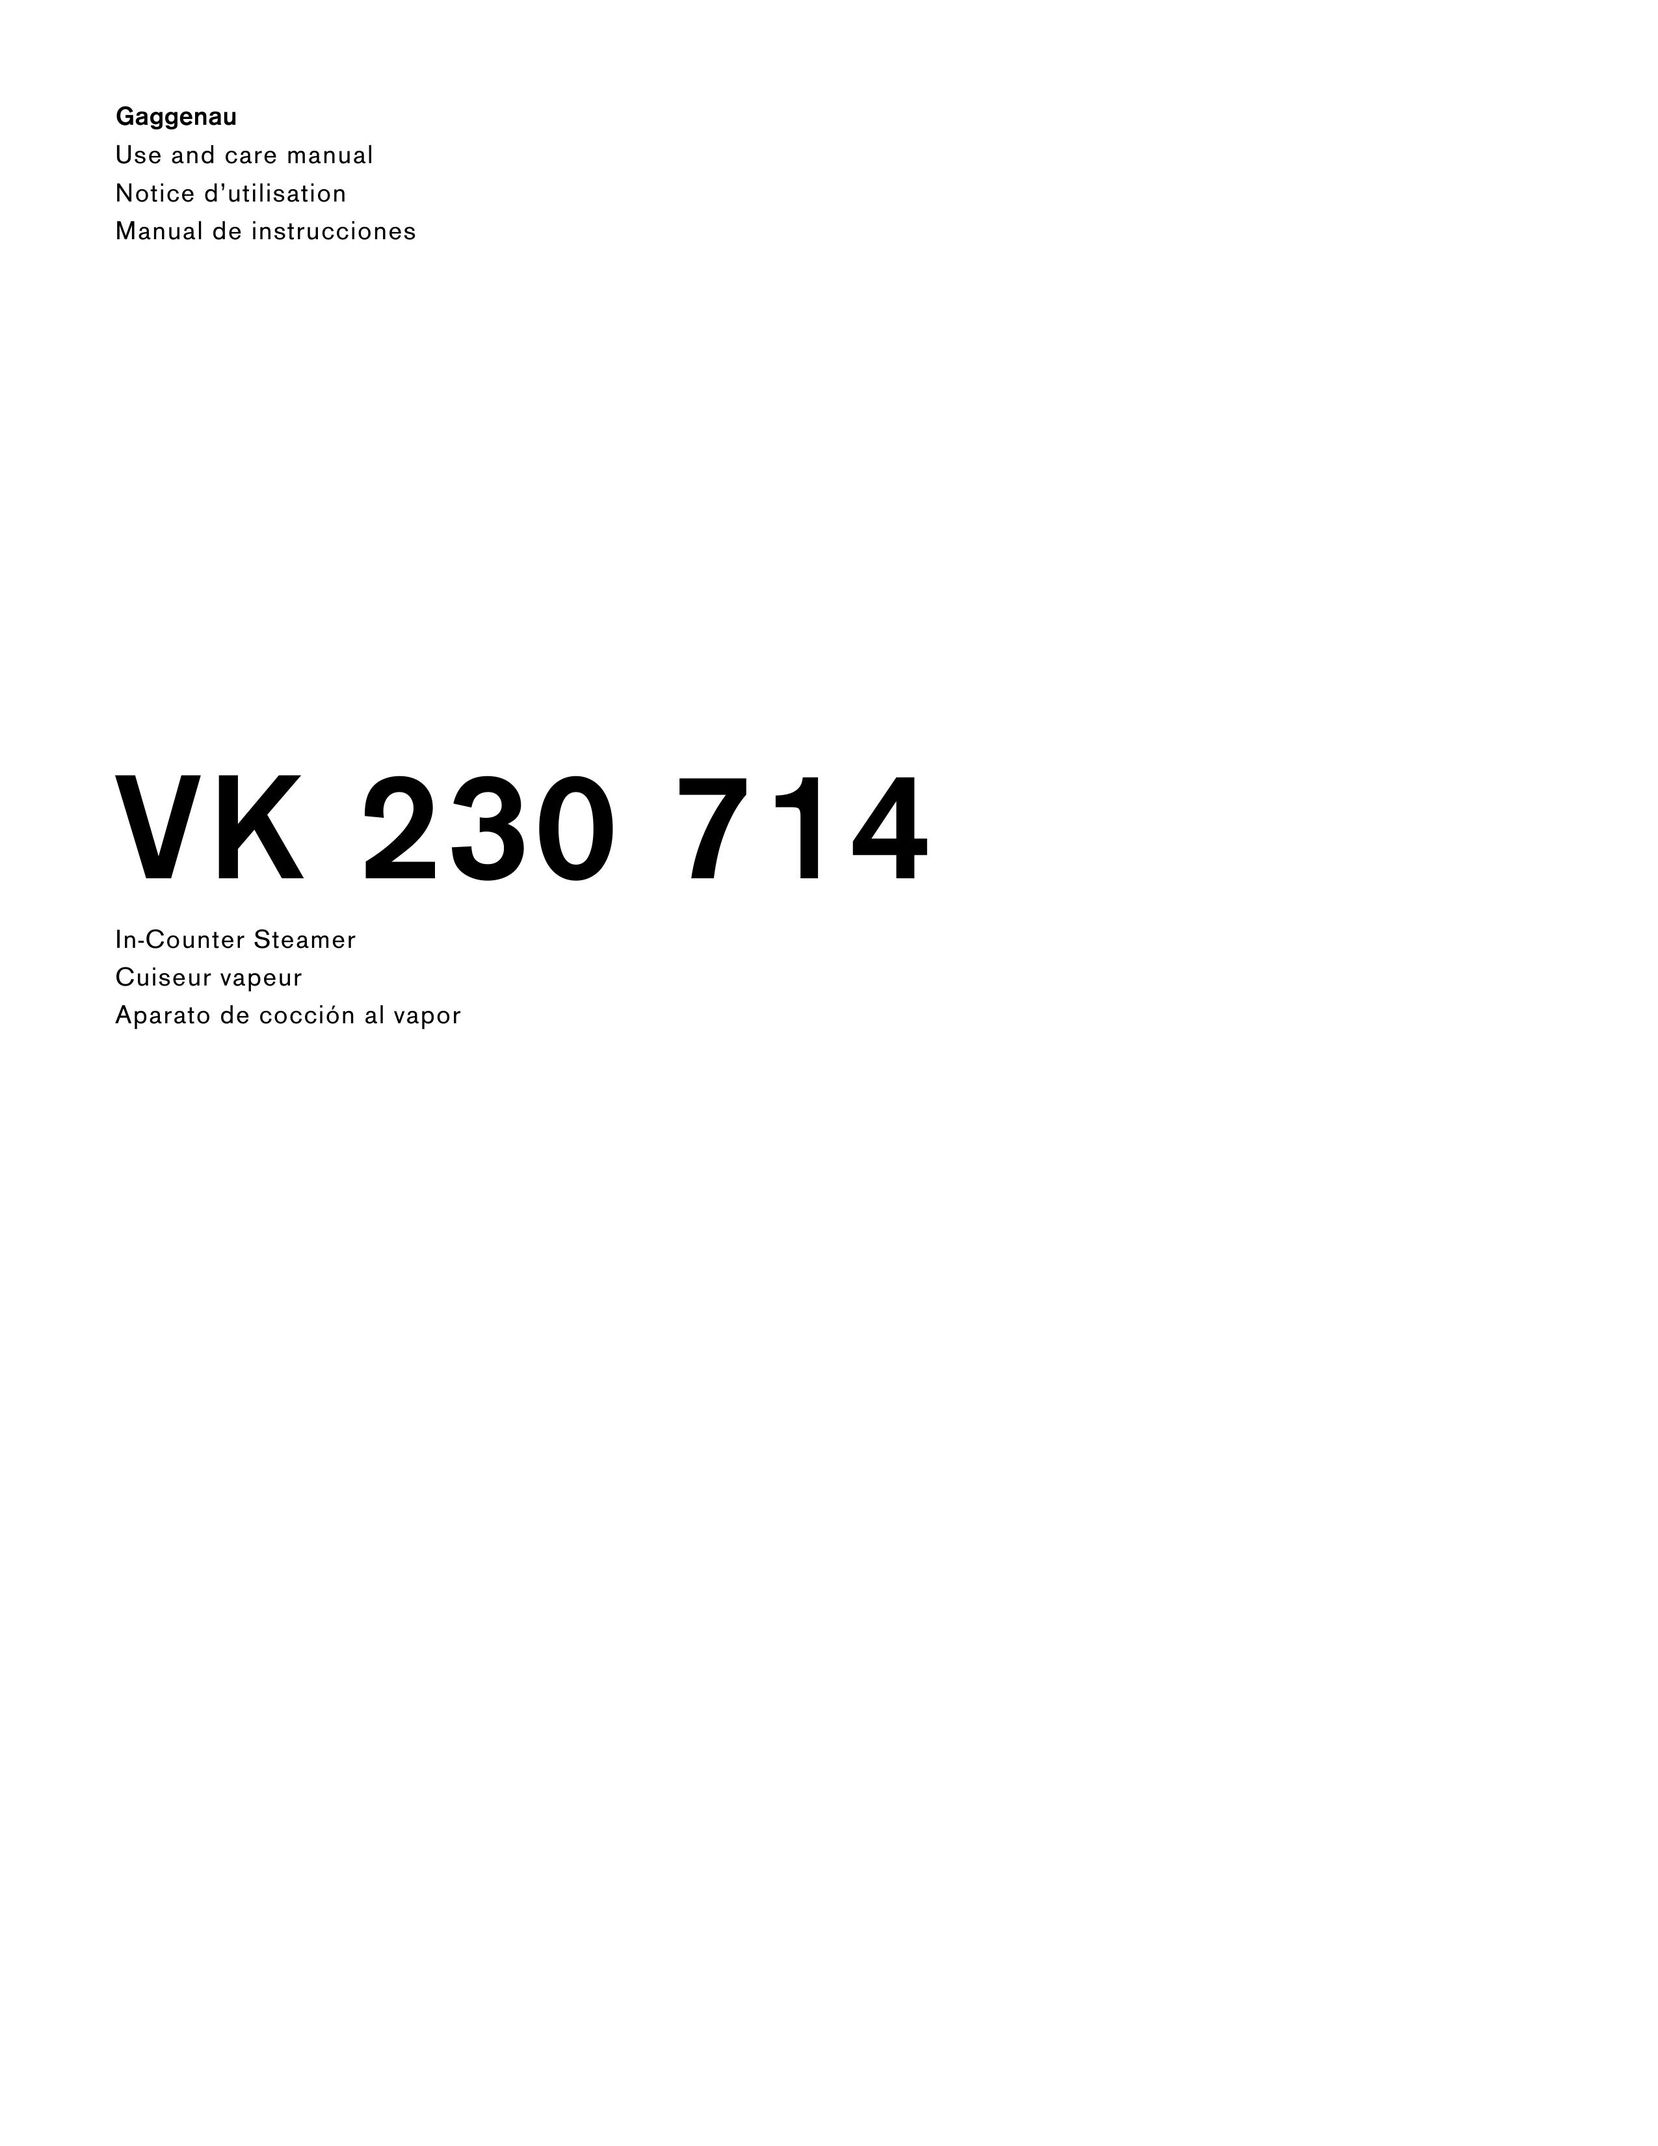 Gaggenau VK 230 714 Carpet Cleaner User Manual